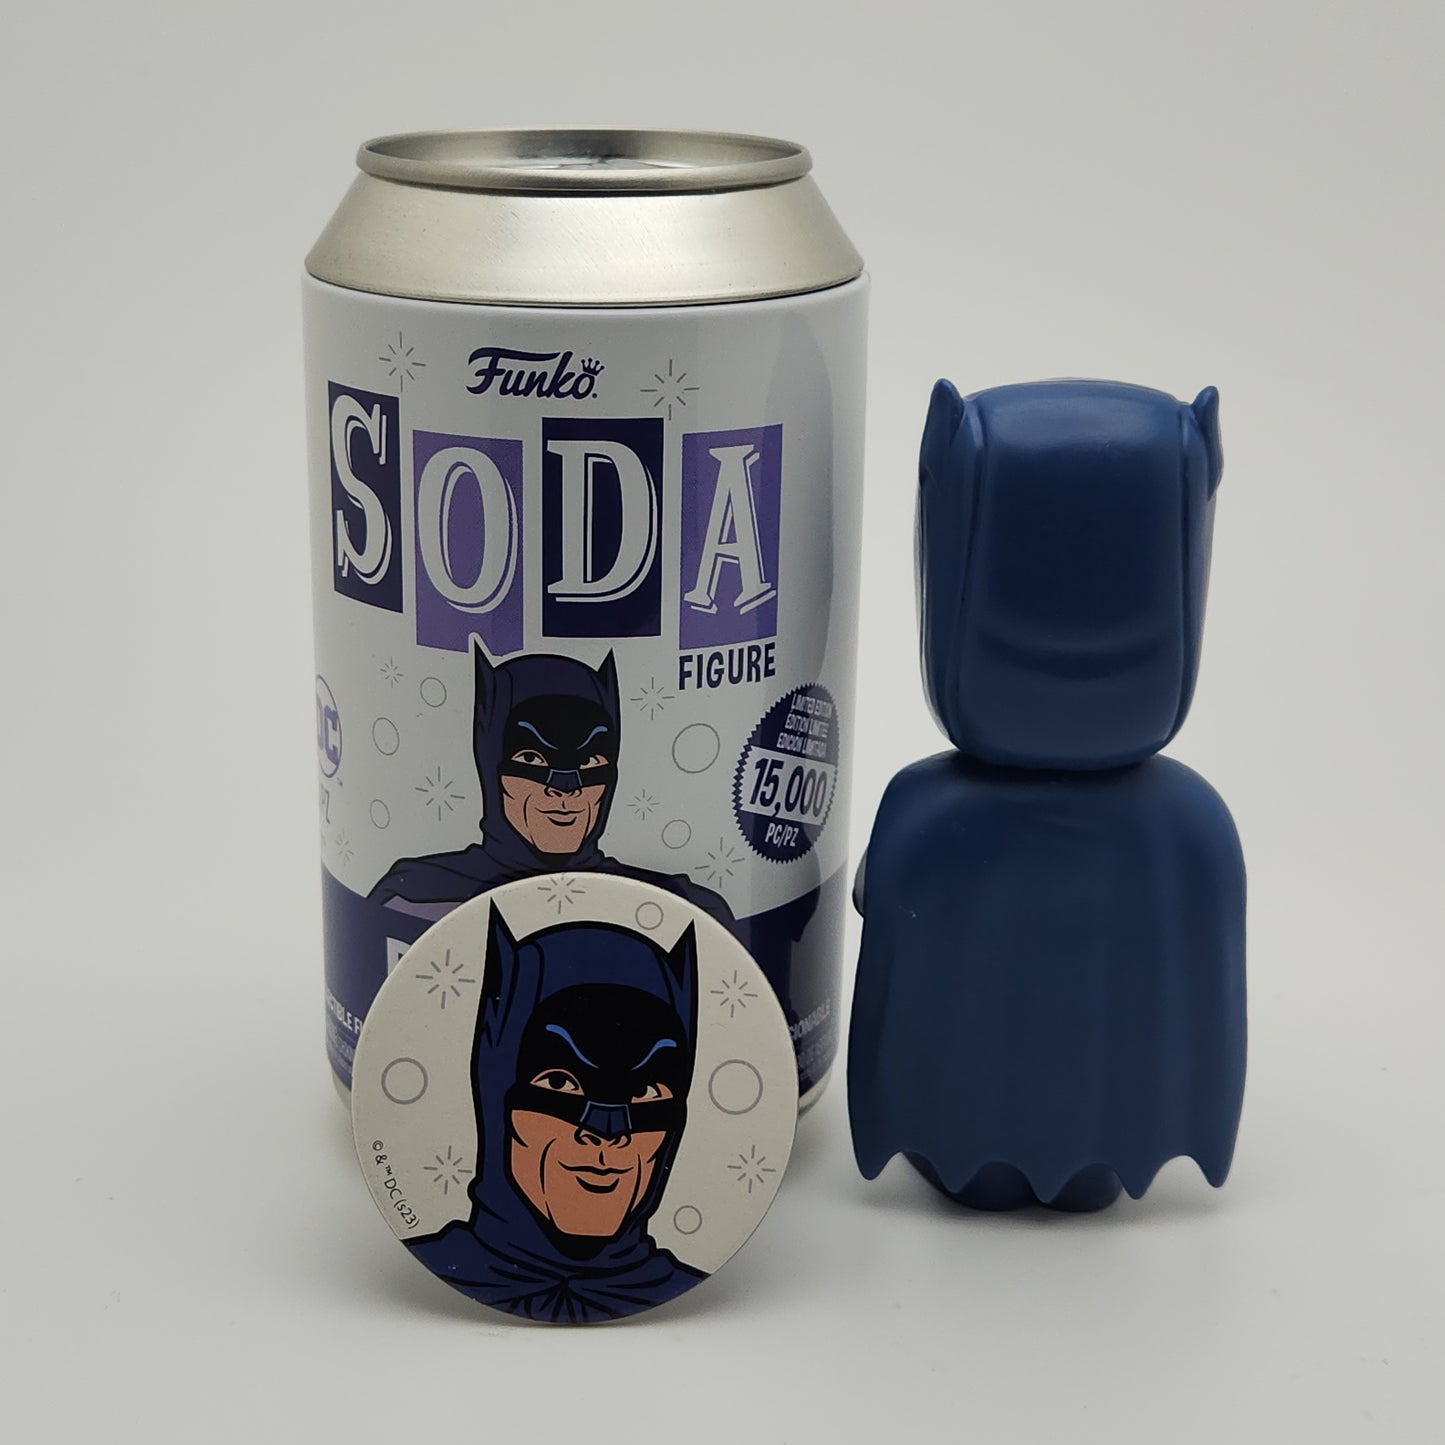 Funko Soda- Batman (Classic TV Series)